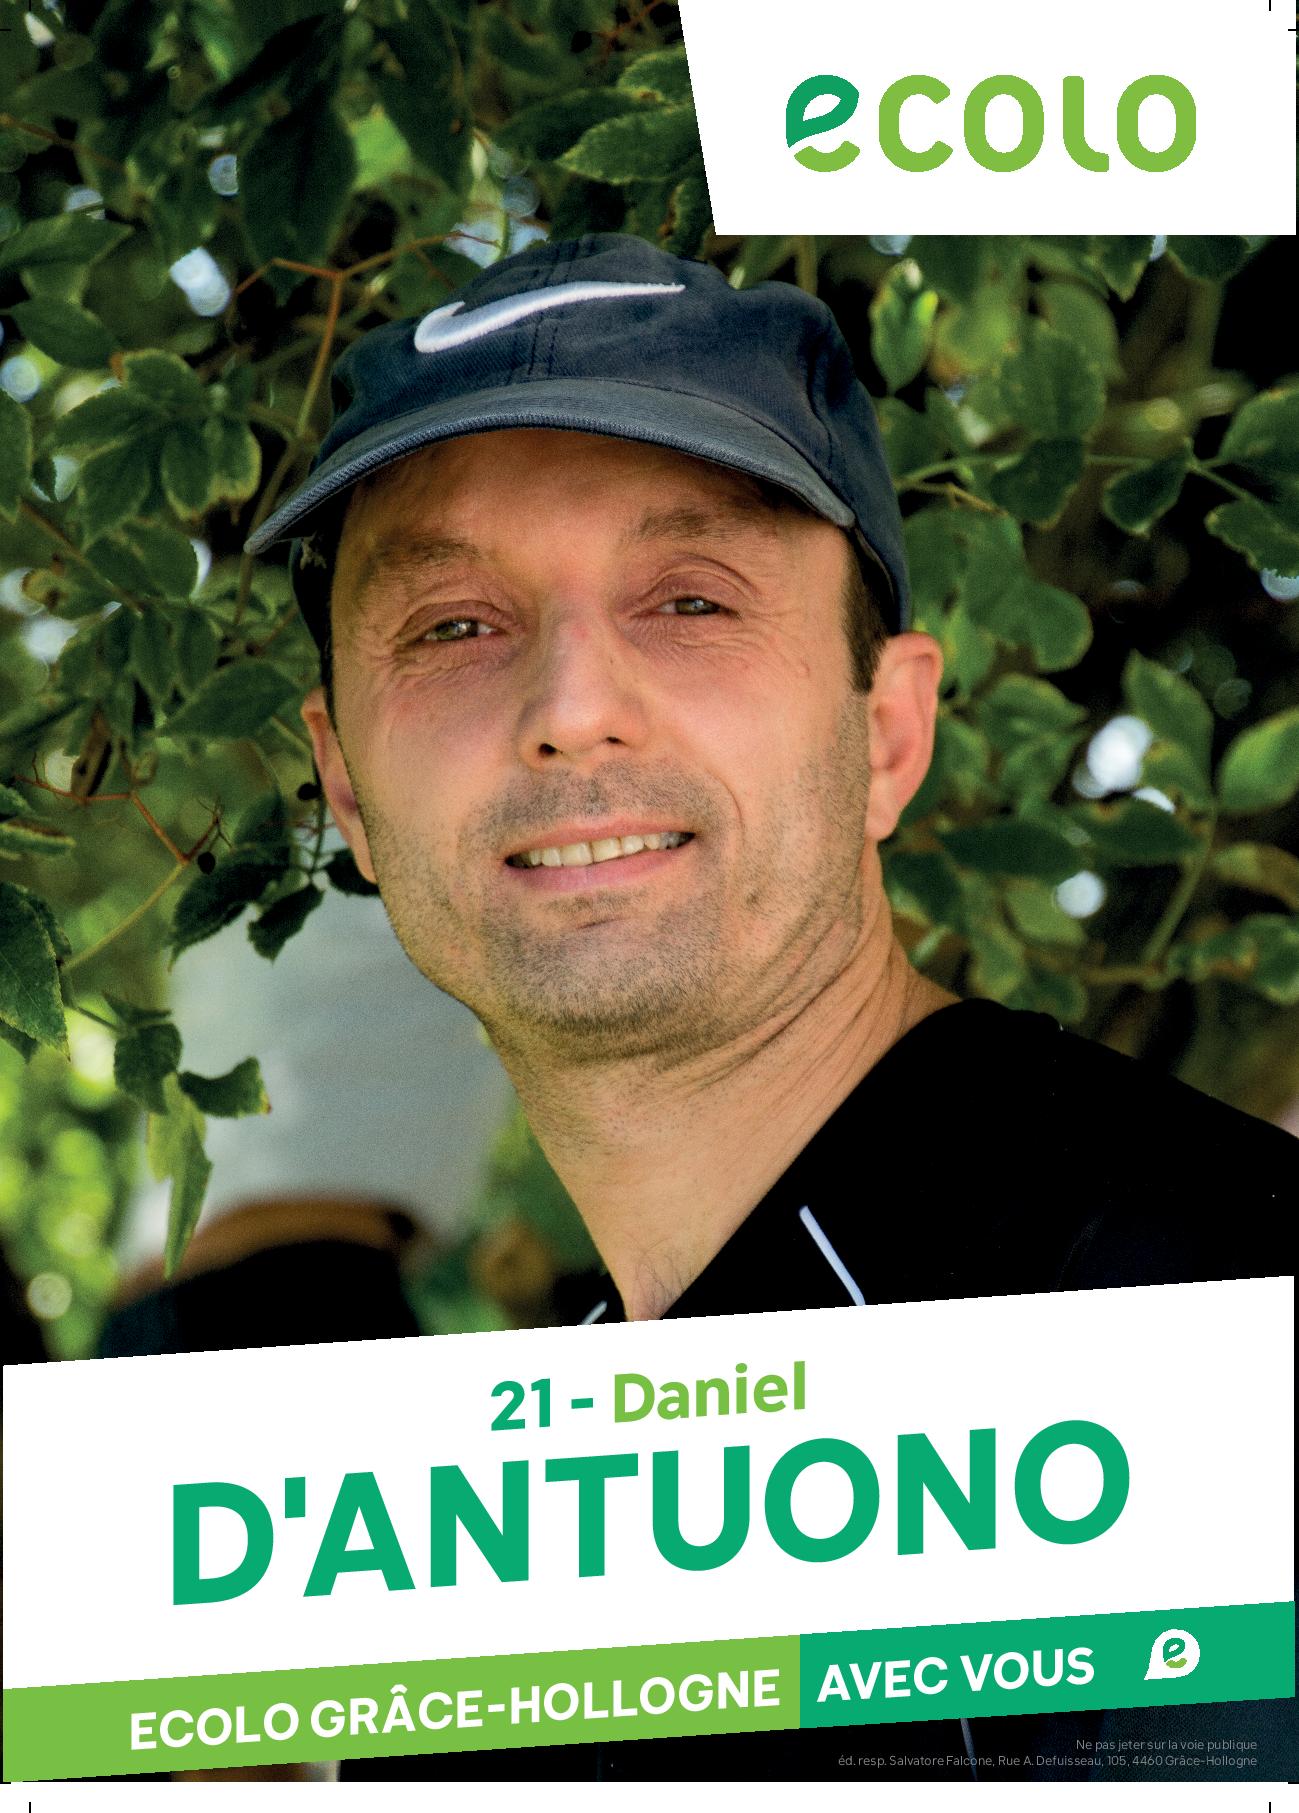 Daniel D'ANTUONO